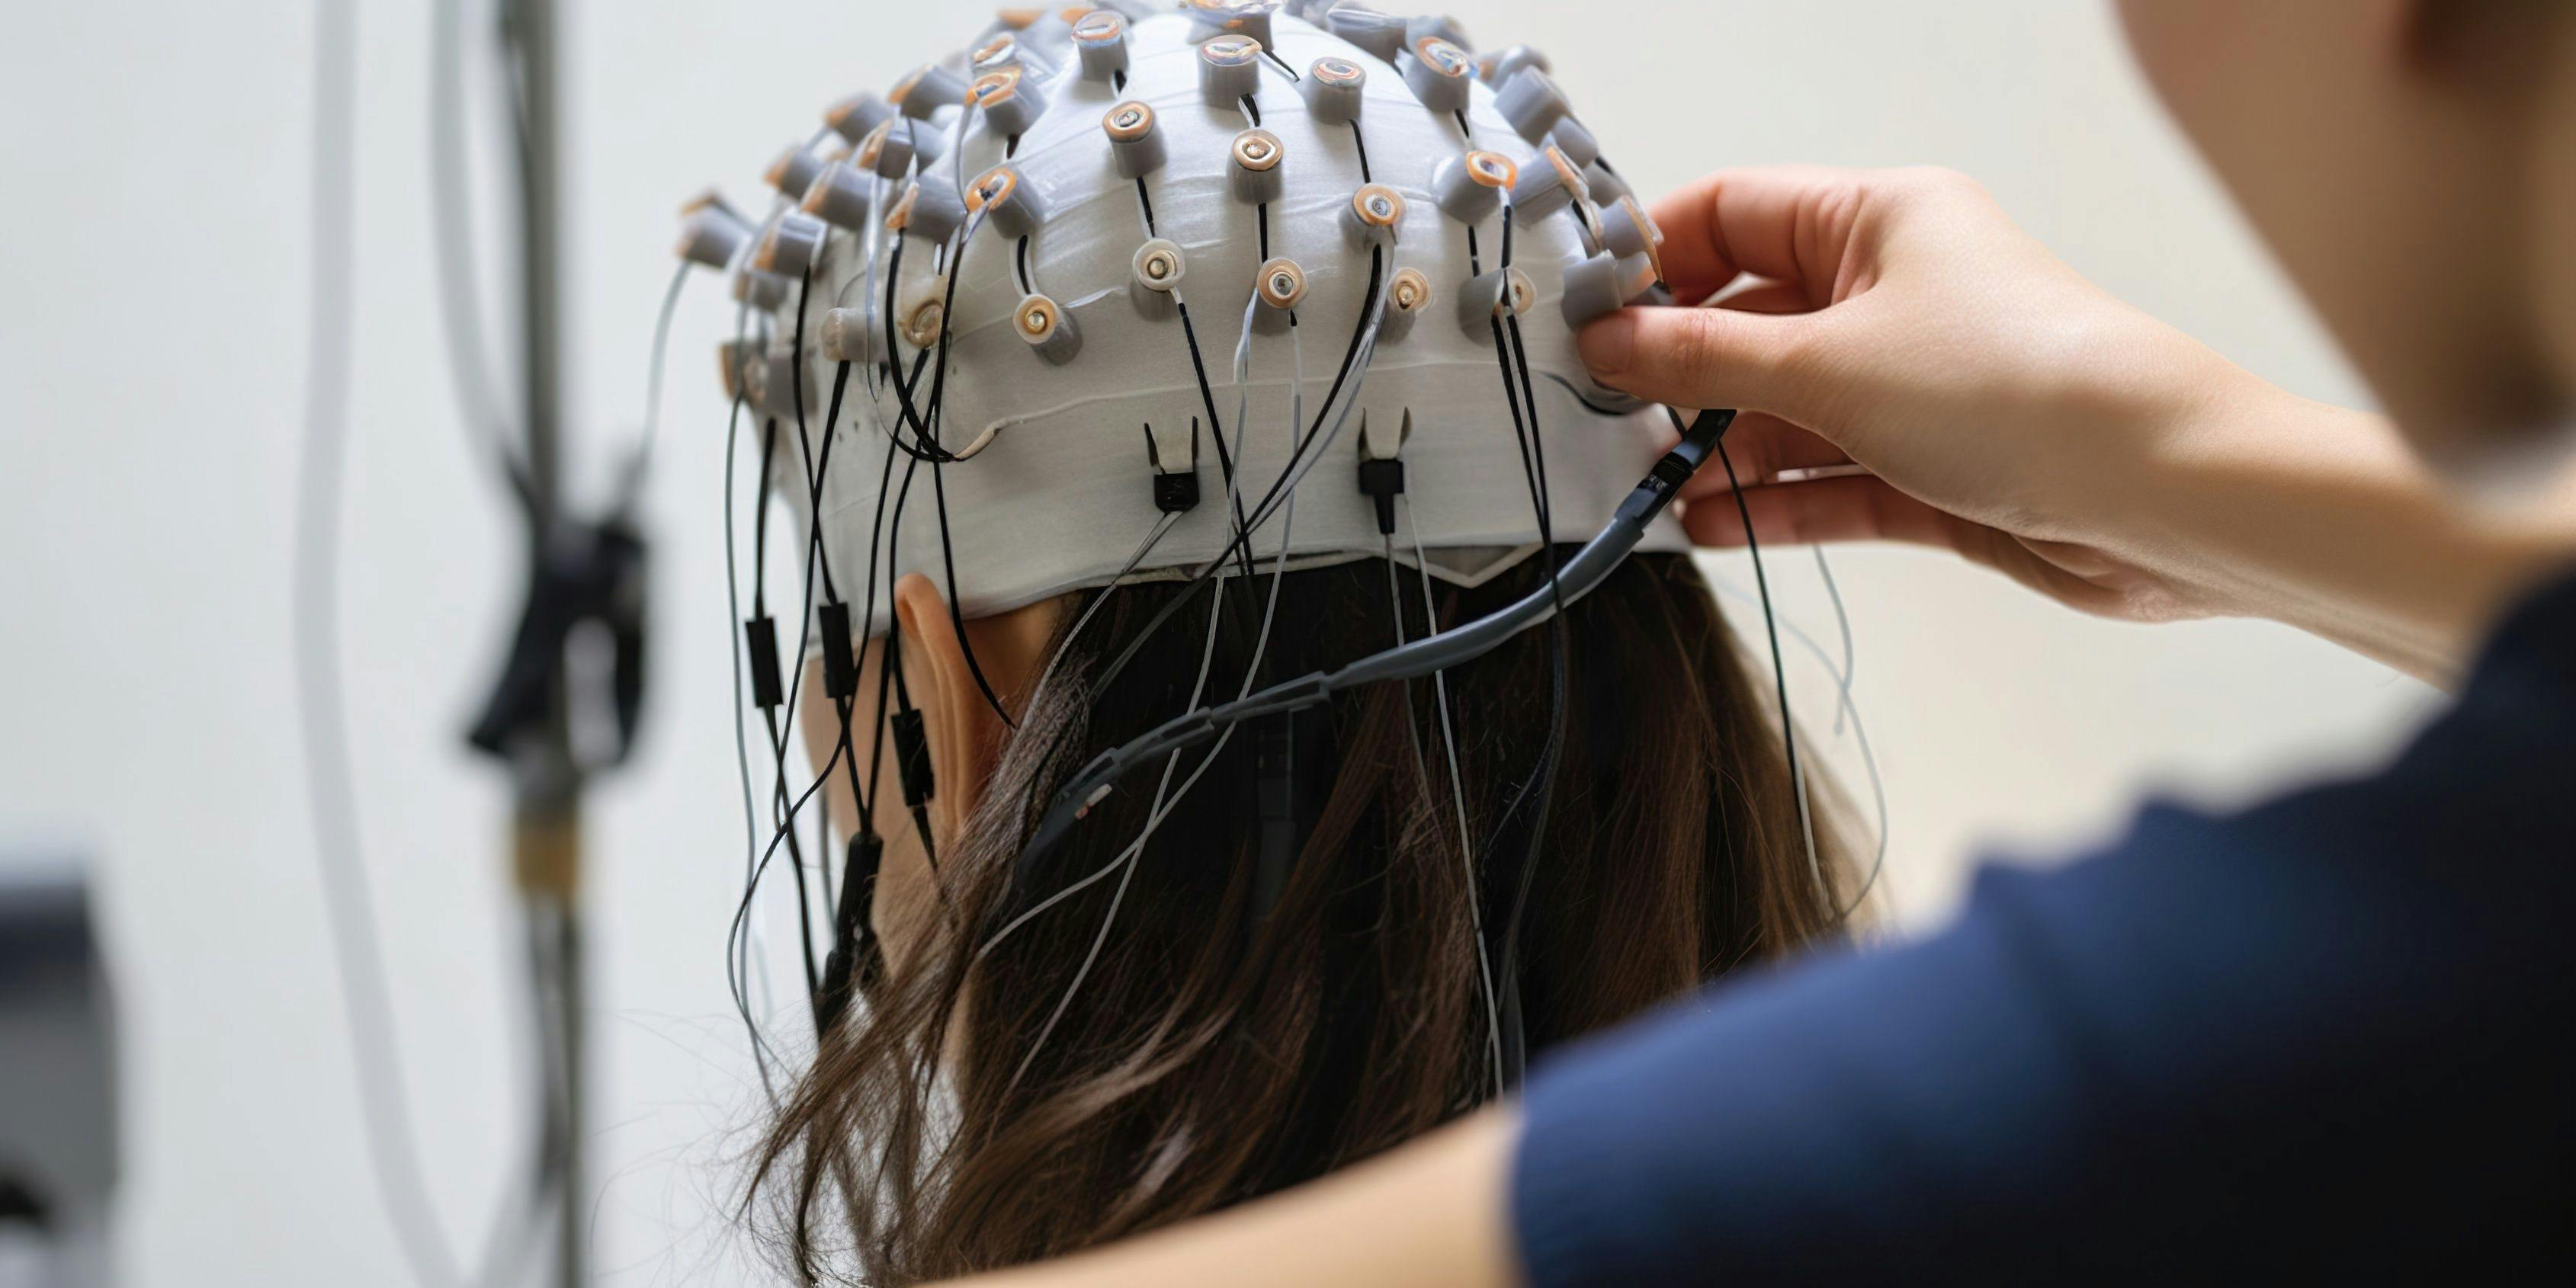 EEG monitoring | Image credit: koldunova - stock.adobe.com 